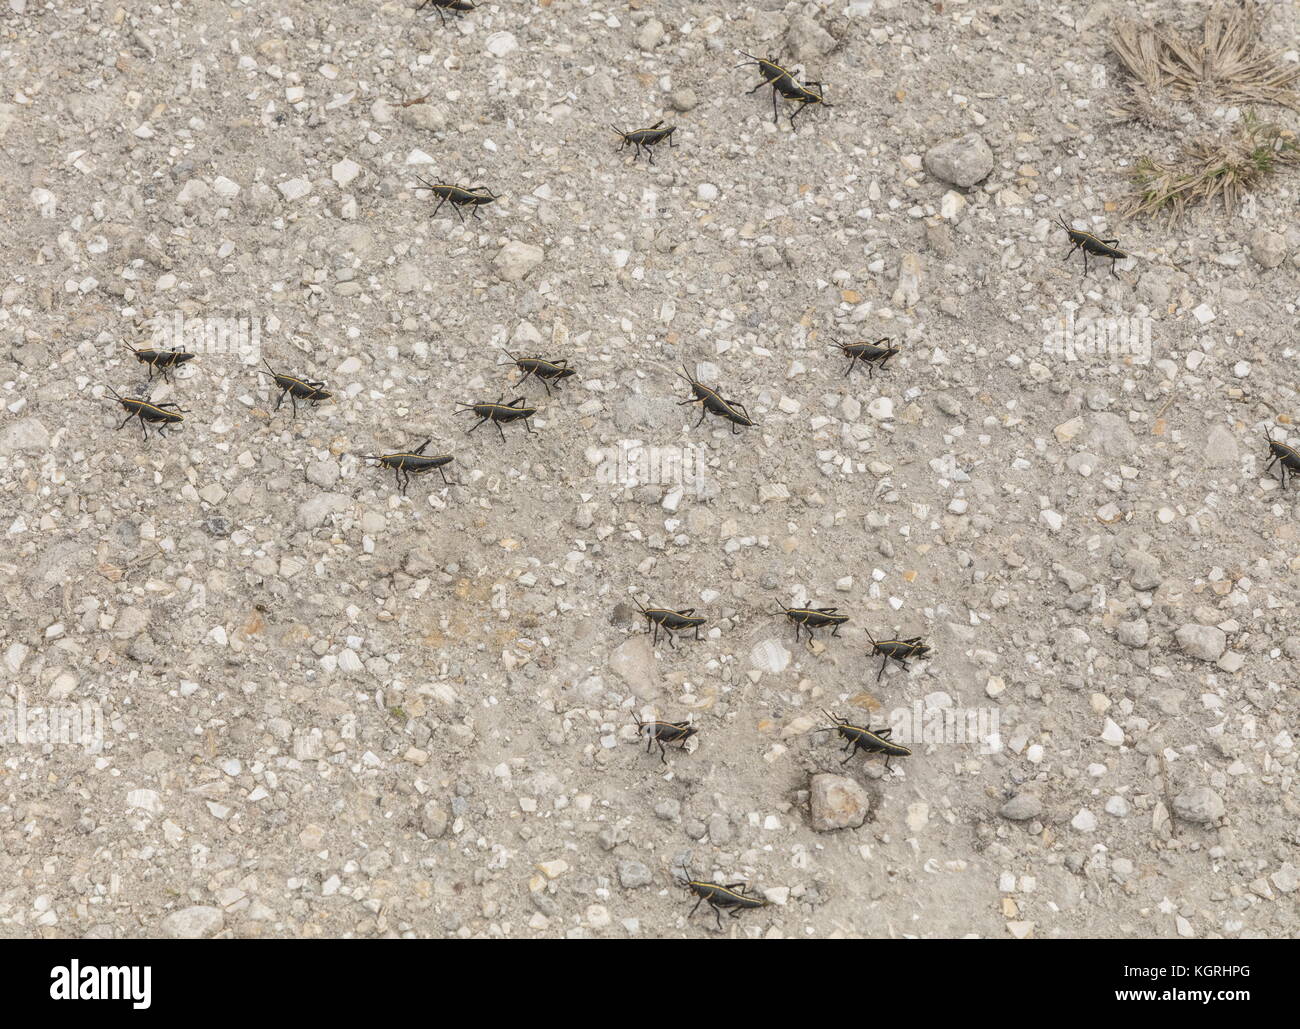 Gregarious nymphs of the eastern lubber grasshopper, Romalea microptera, on open ground, Loxahatchee, Florida. Stock Photo